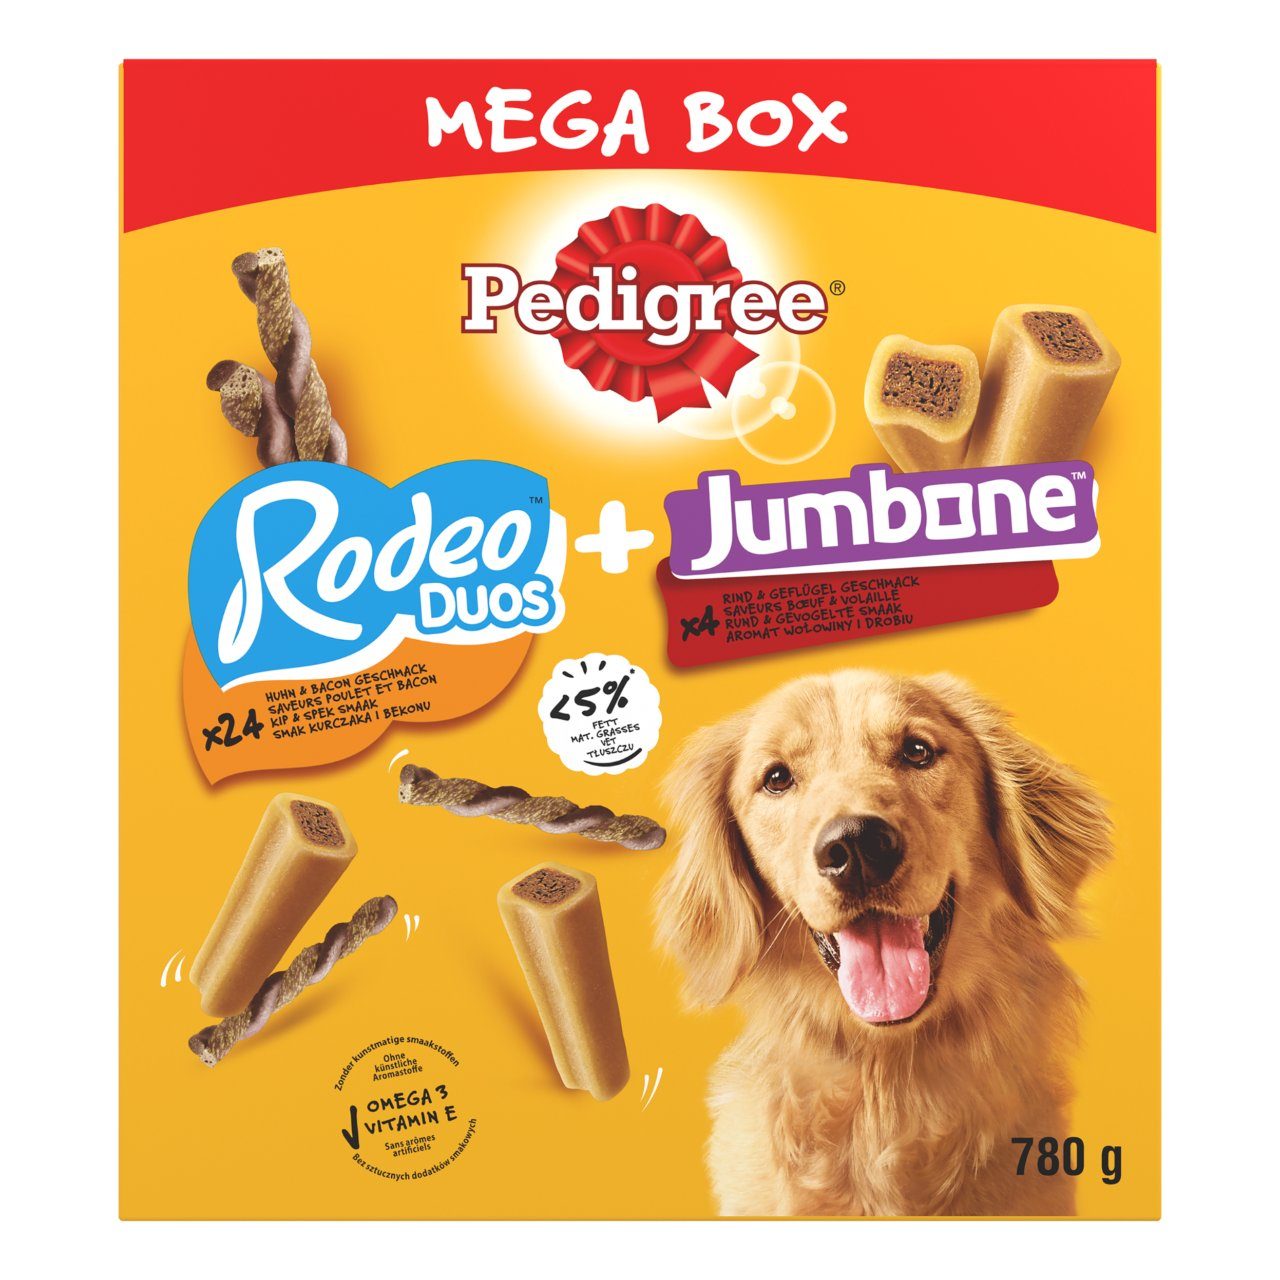 Pedigree Megabox Rodeo + Jumbone 780g